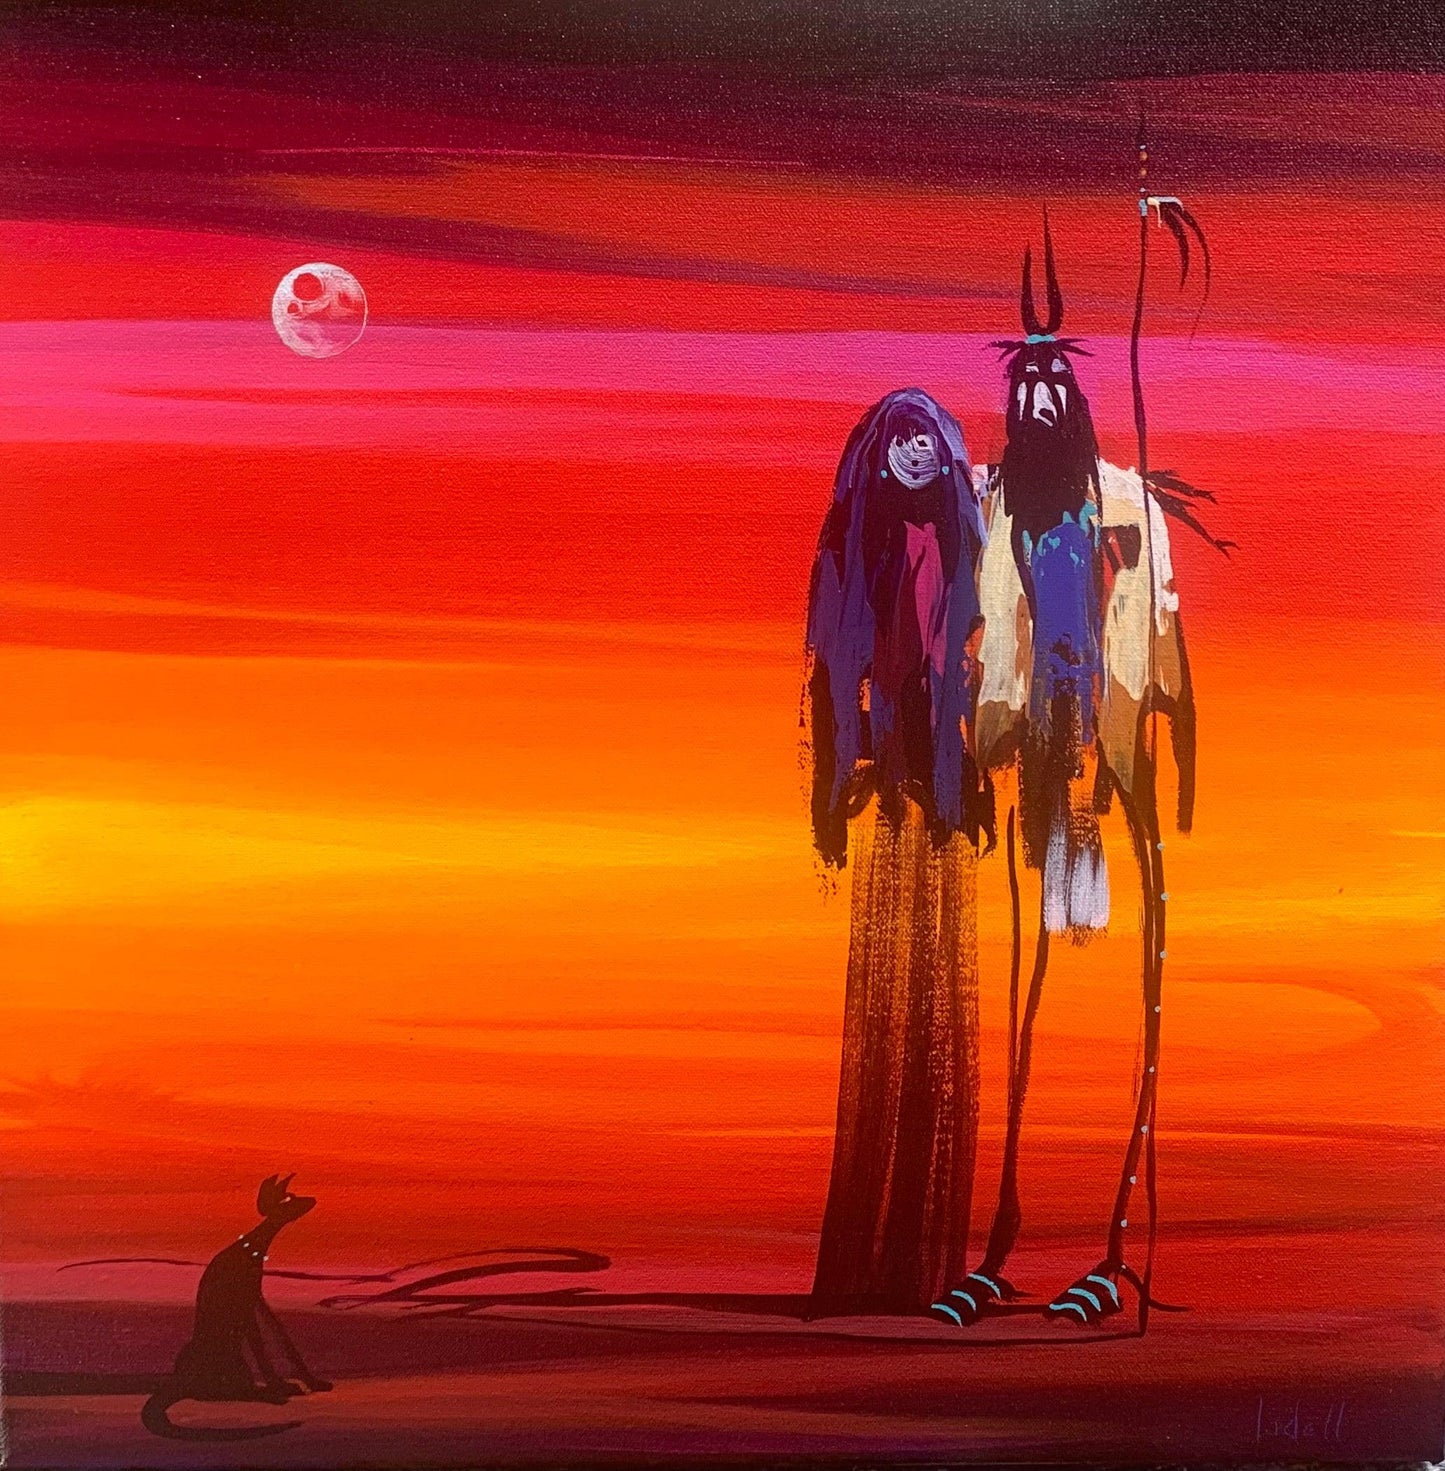 Full Moon Cat-Painting-Arlene LaDell Hayes-Sorrel Sky Gallery